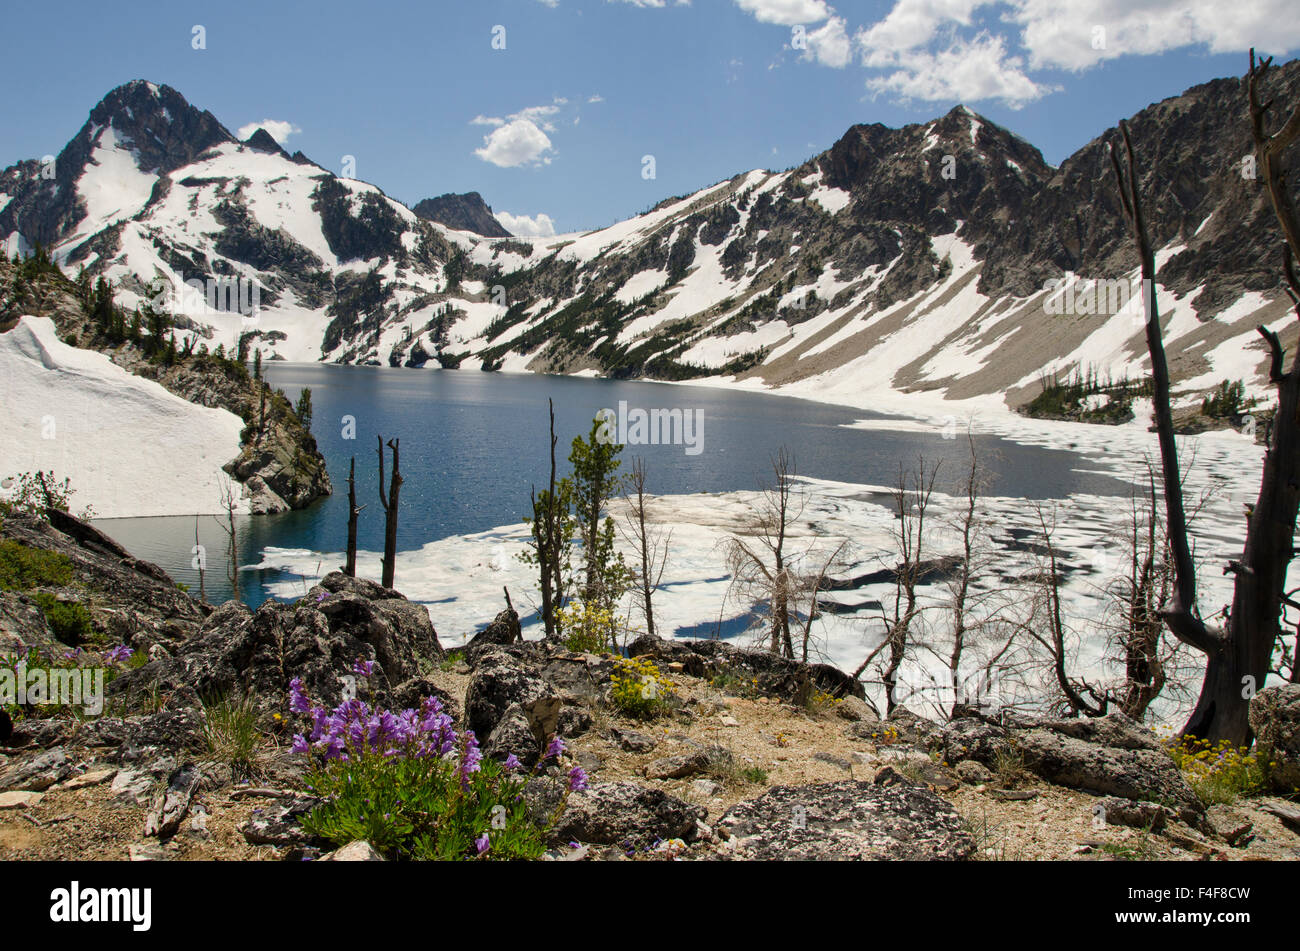 https://c8.alamy.com/comp/F4F8CW/alpine-lake-and-alpine-peak-sawtooth-national-forest-wilderness-area-F4F8CW.jpg